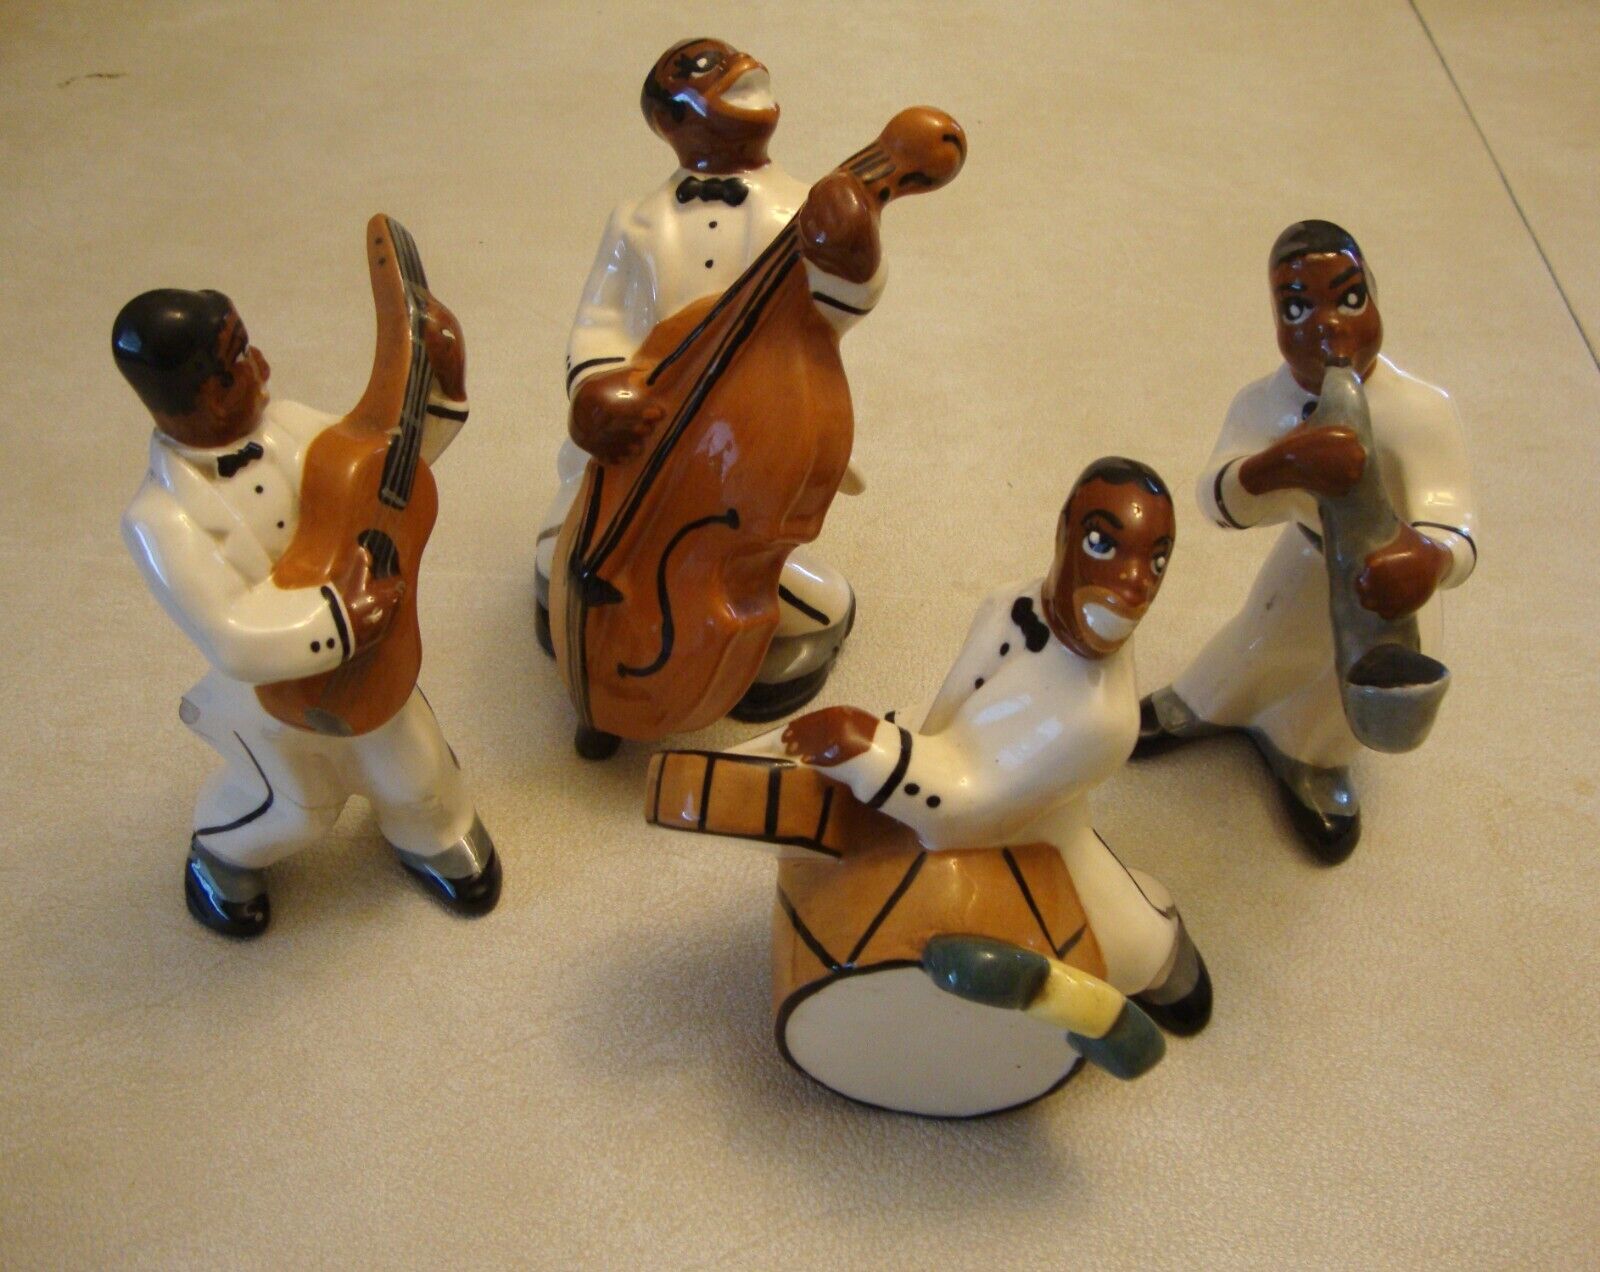 Vintage Art Deco Black Jazz Musician Figurines, Very Rare  circa 1940, set of 4